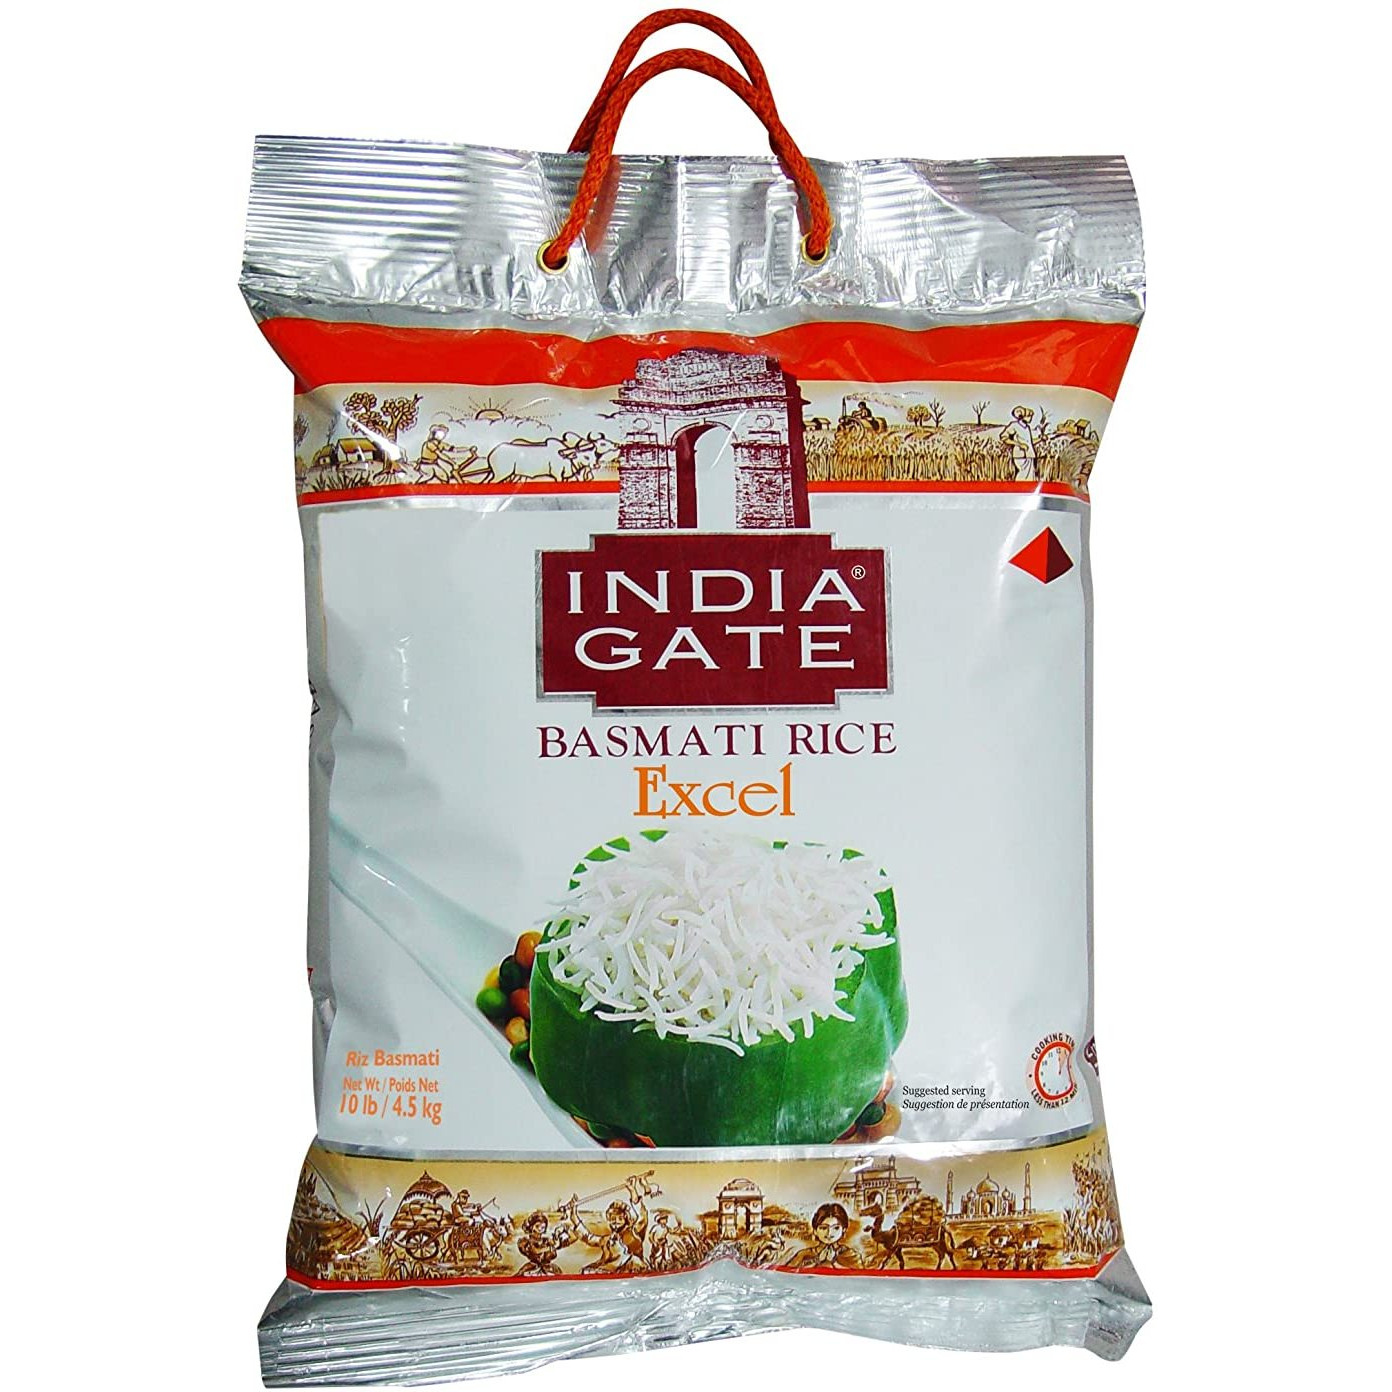 Case of 4 - India Gate Basmati Rice Excel - 10 Lb (4.5 Kg)